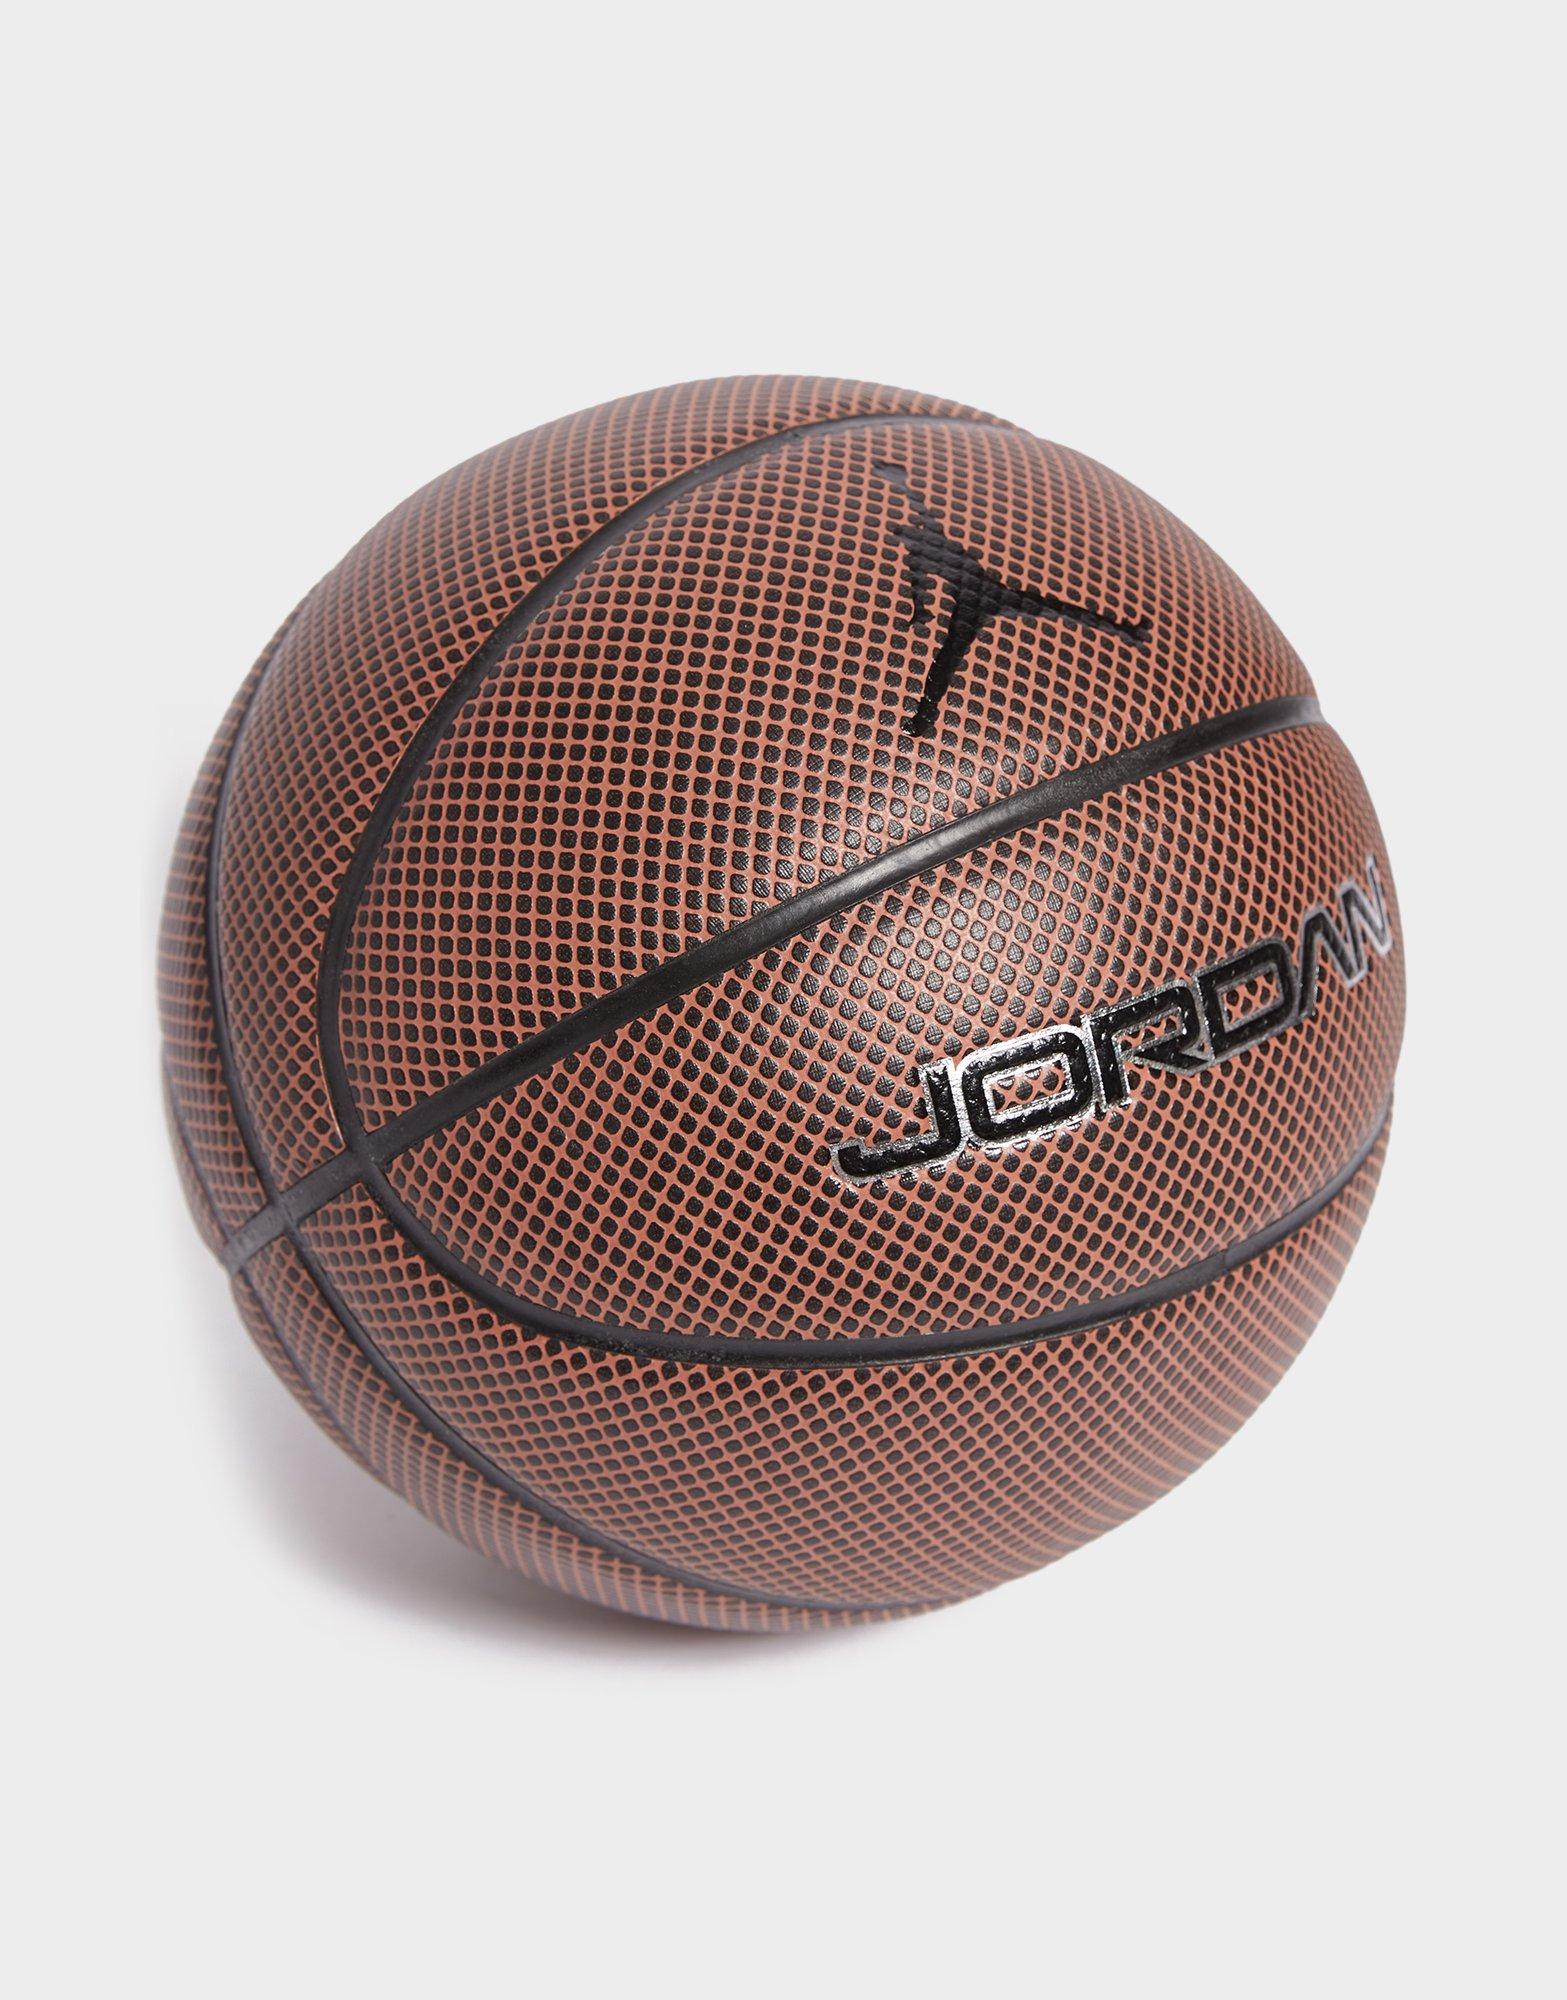 jordan basketball ball